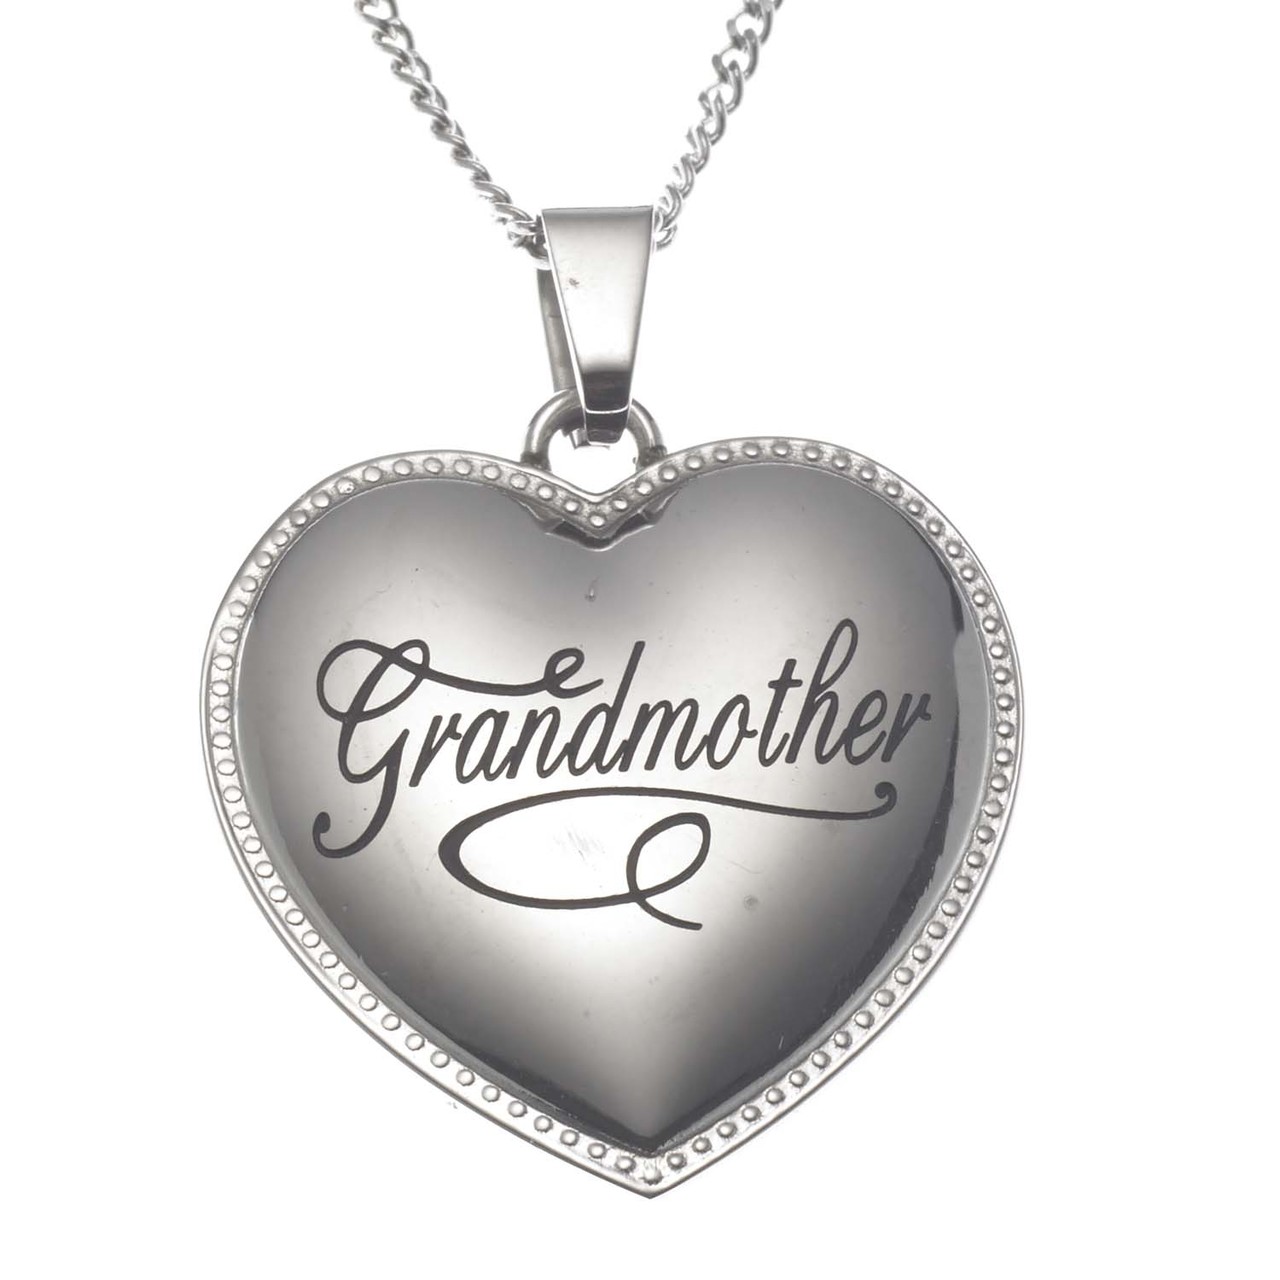 Grandmother Heart Pendant